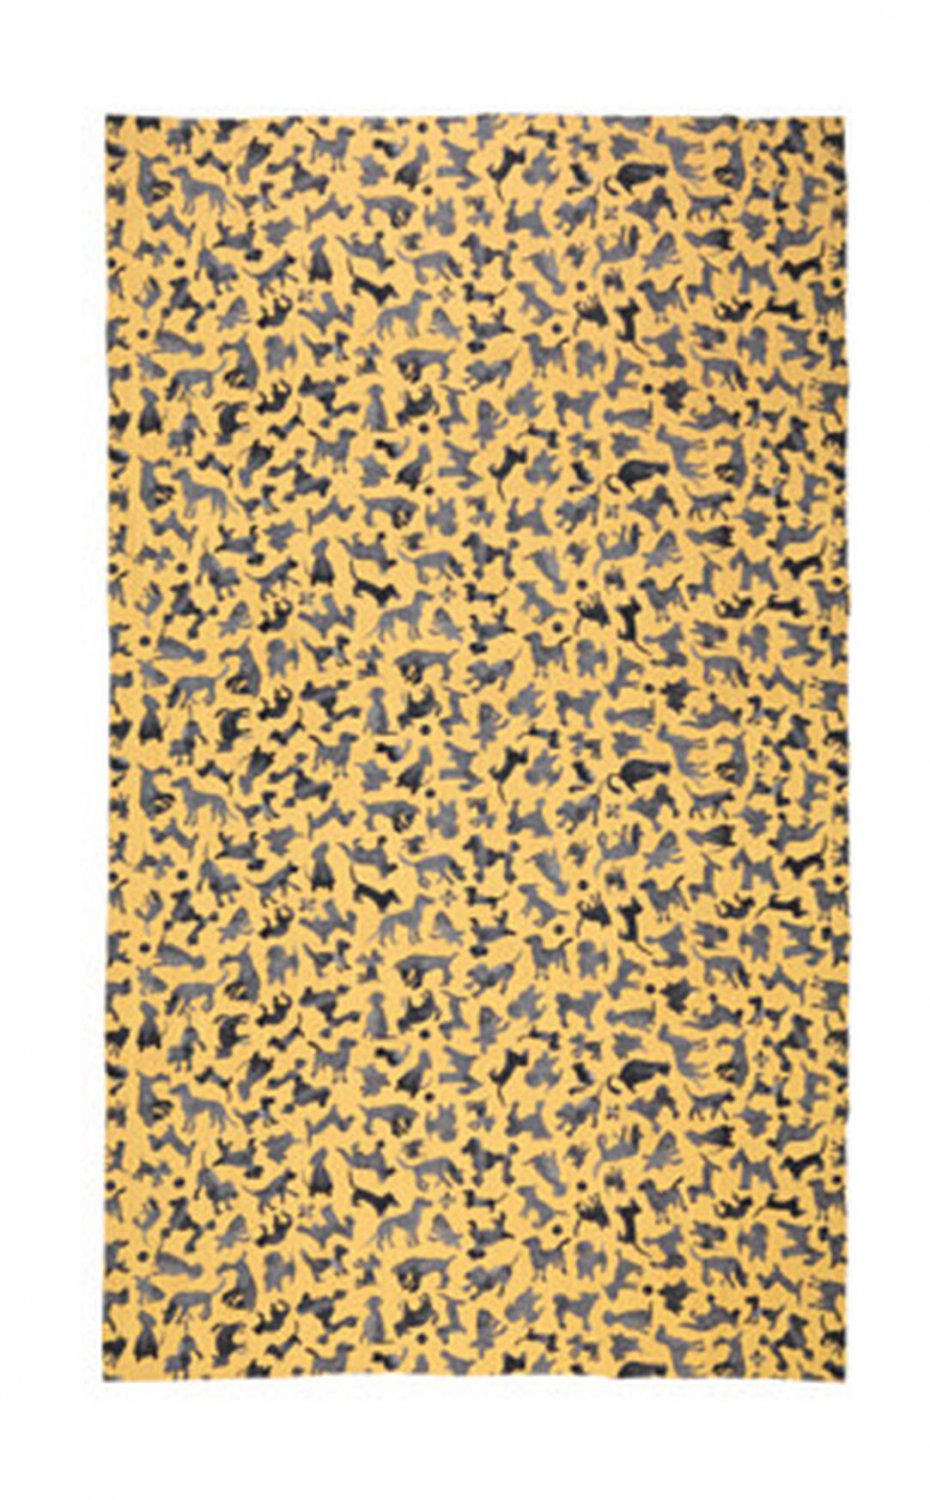 IKEA Sallskap Fabric Material DOGS Stripes 3.25 Yd SÃ�LLSKAP Gold Gray Yellow Pre-cut